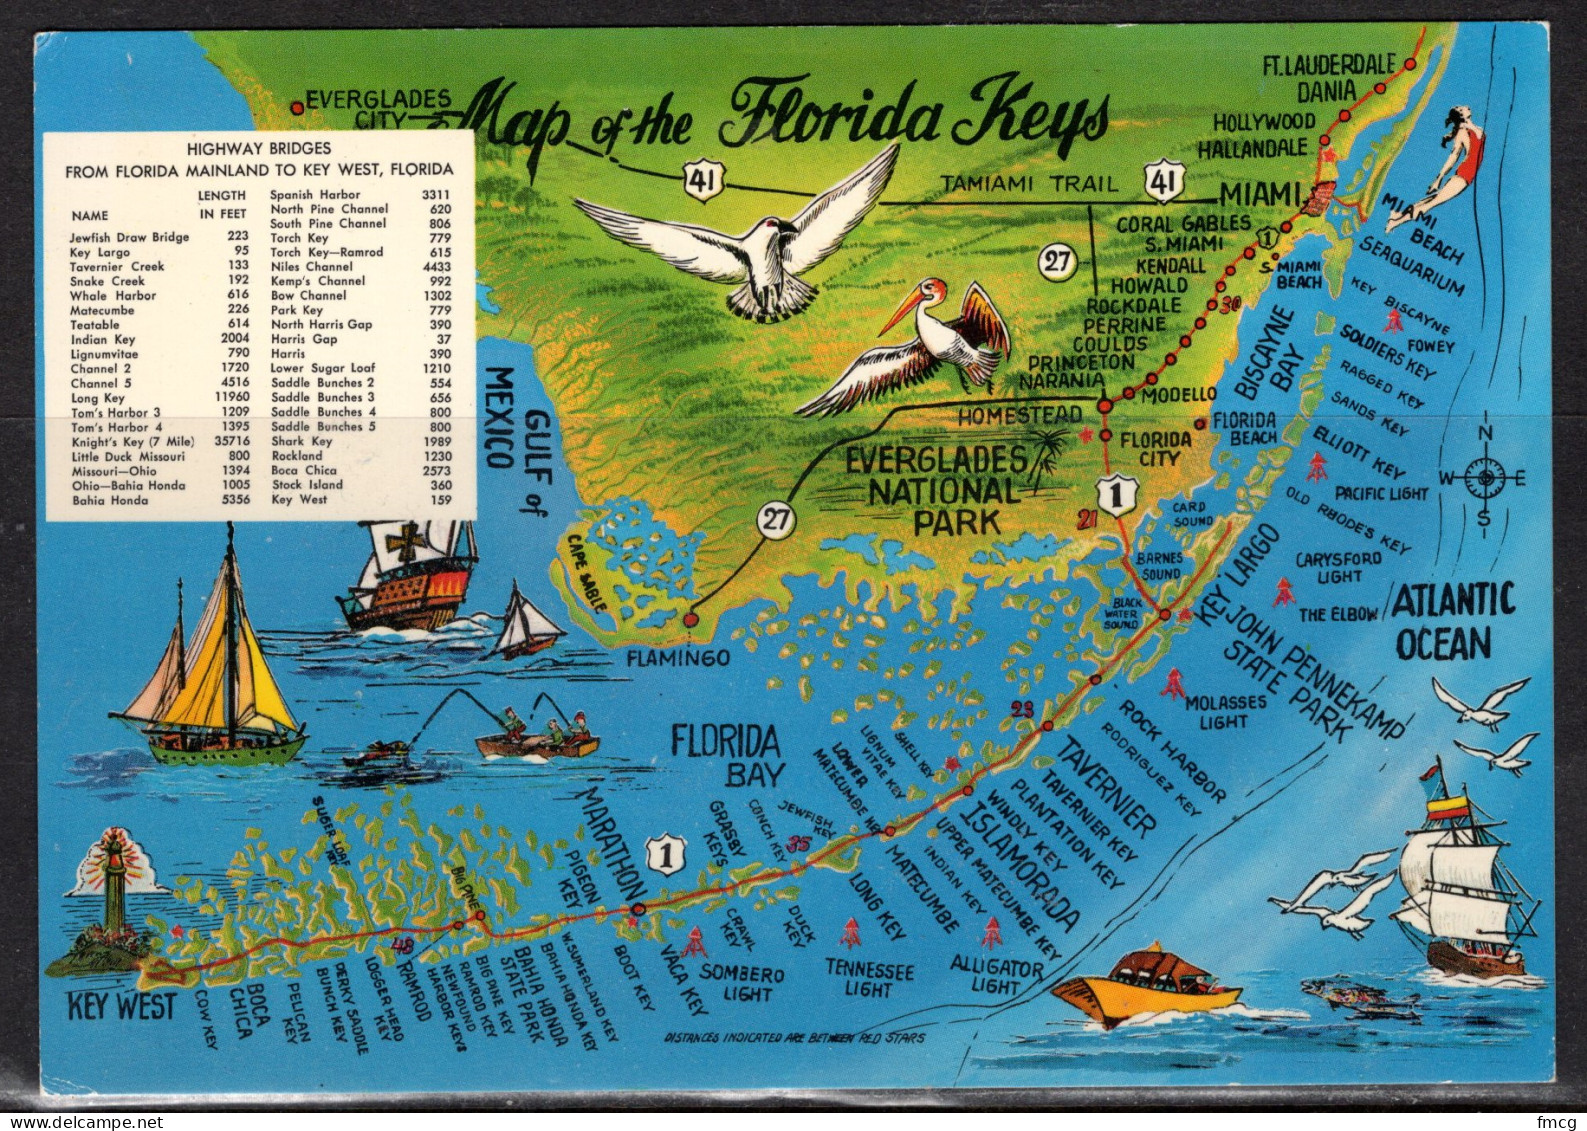 Map, United States, Florida Keys, New - Landkarten